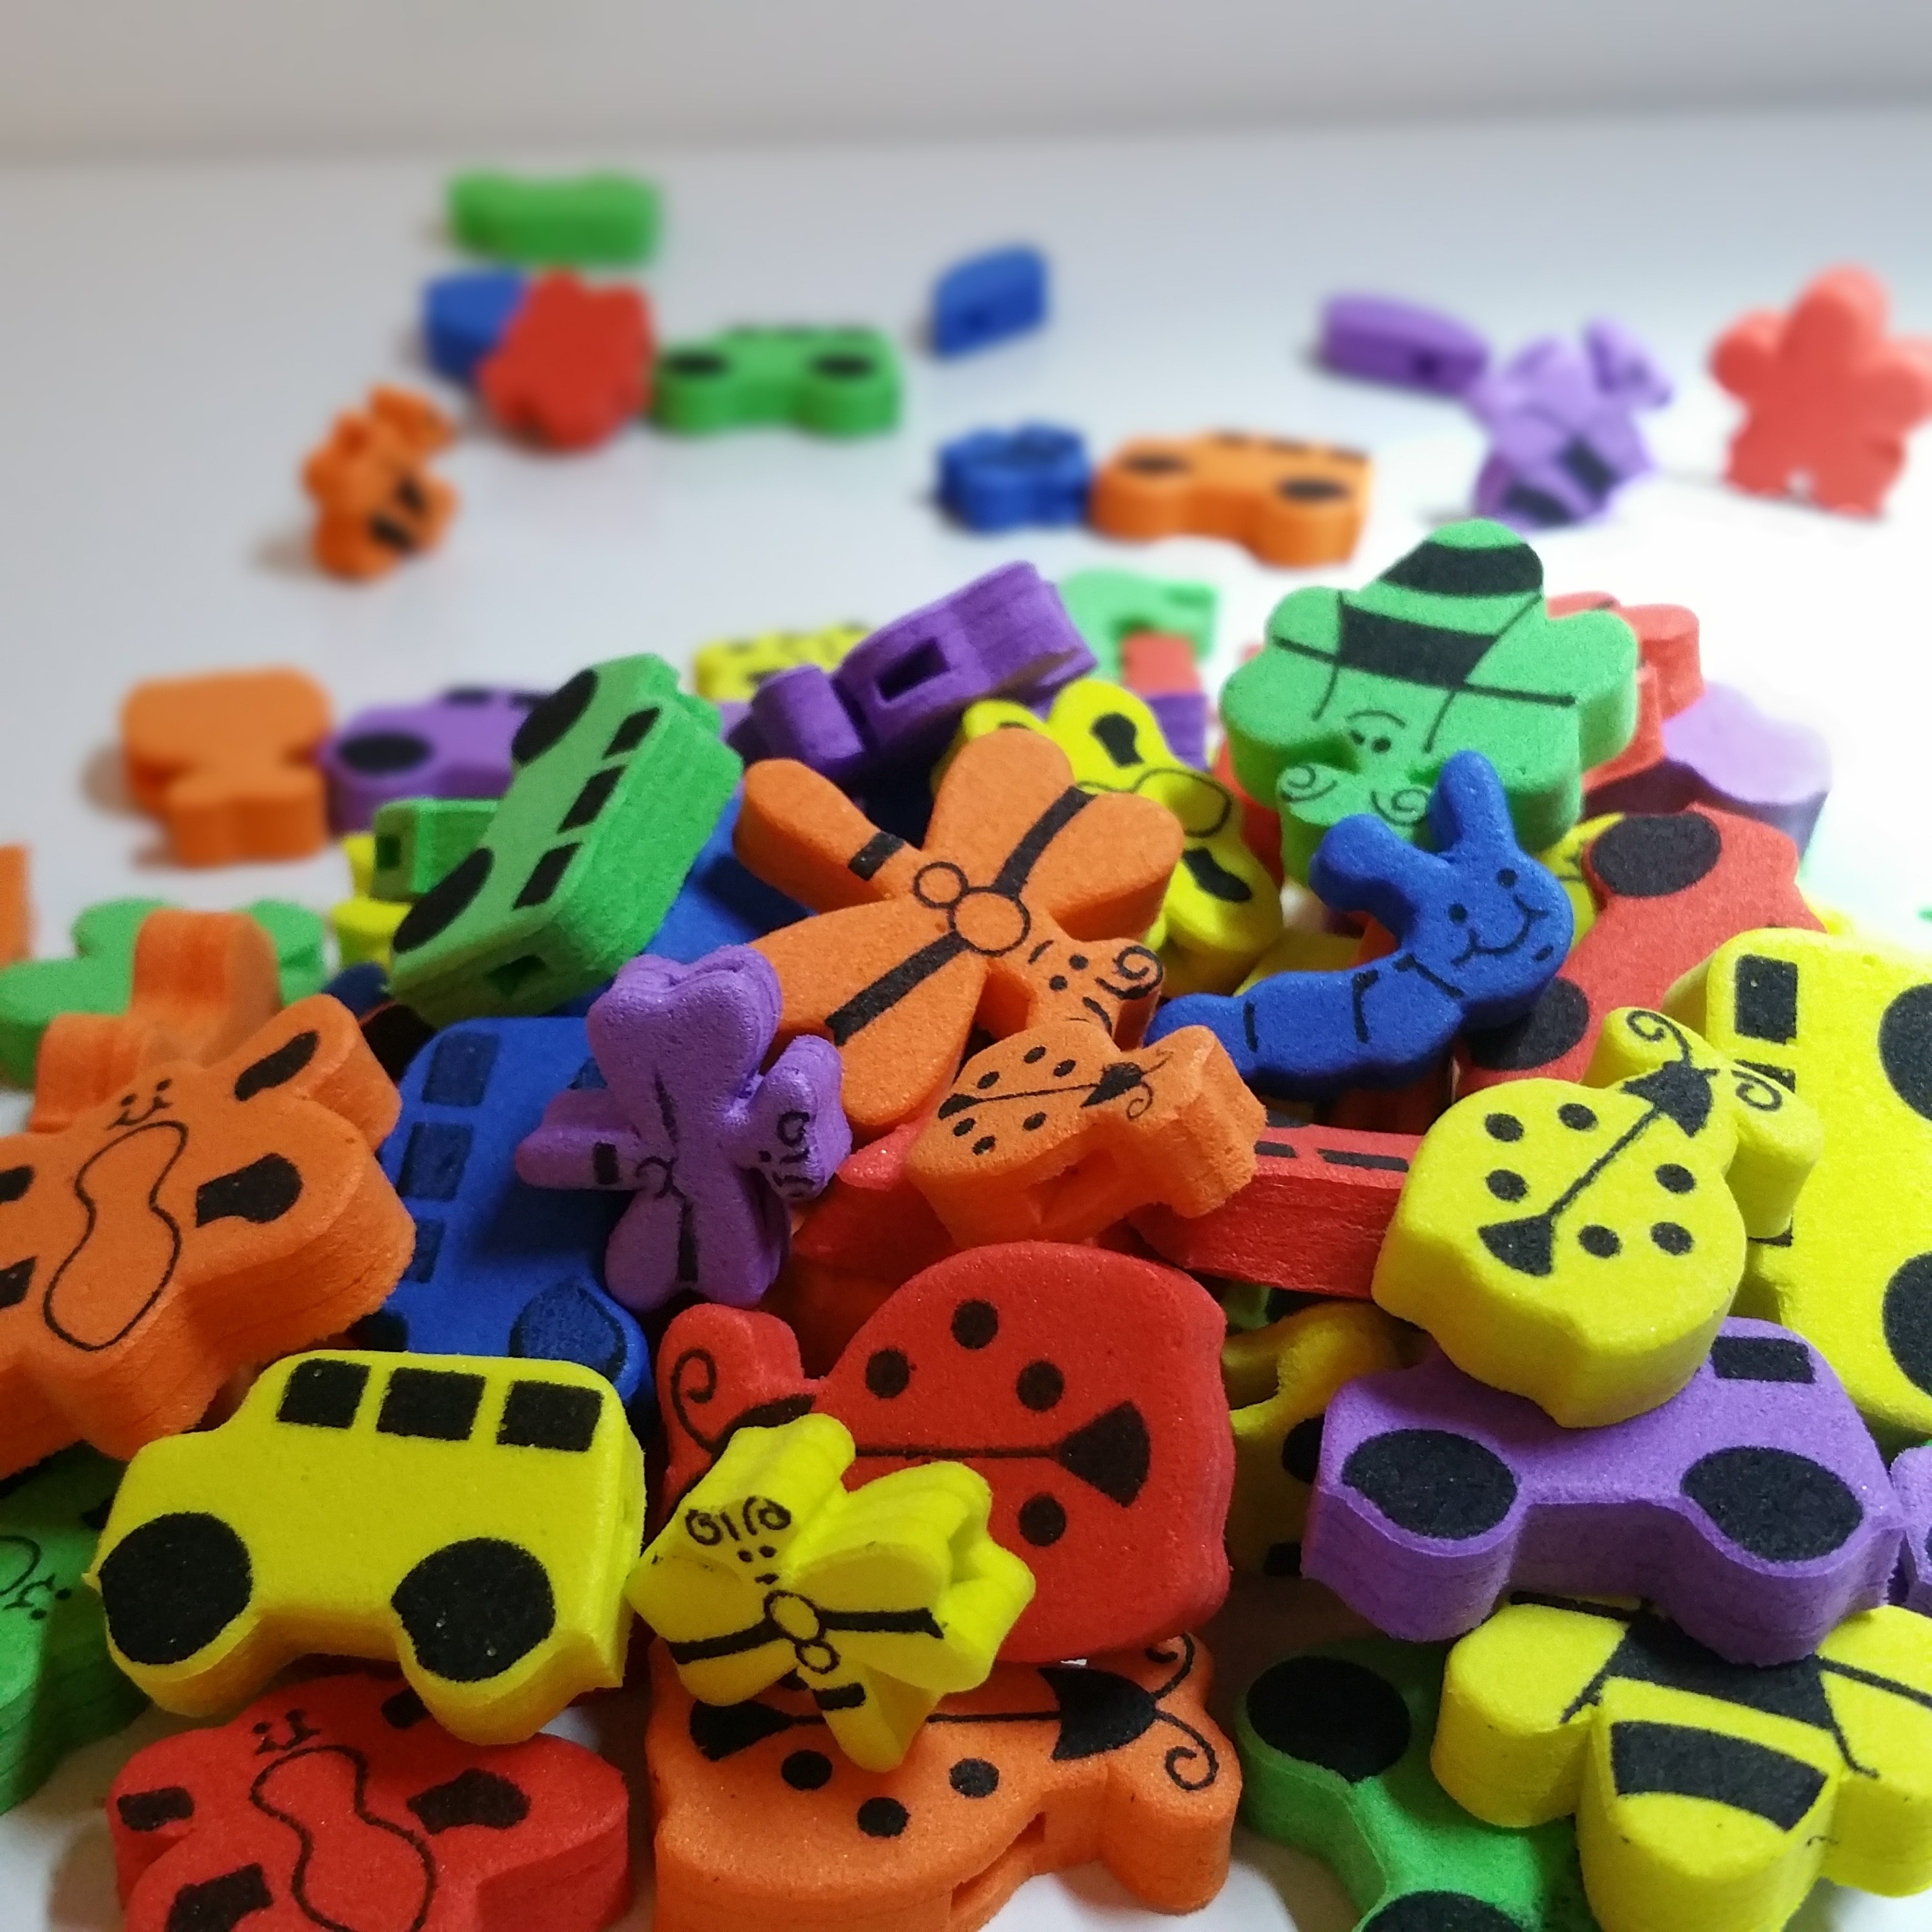 yellow purple orange yellow and green animals plastic toy lot